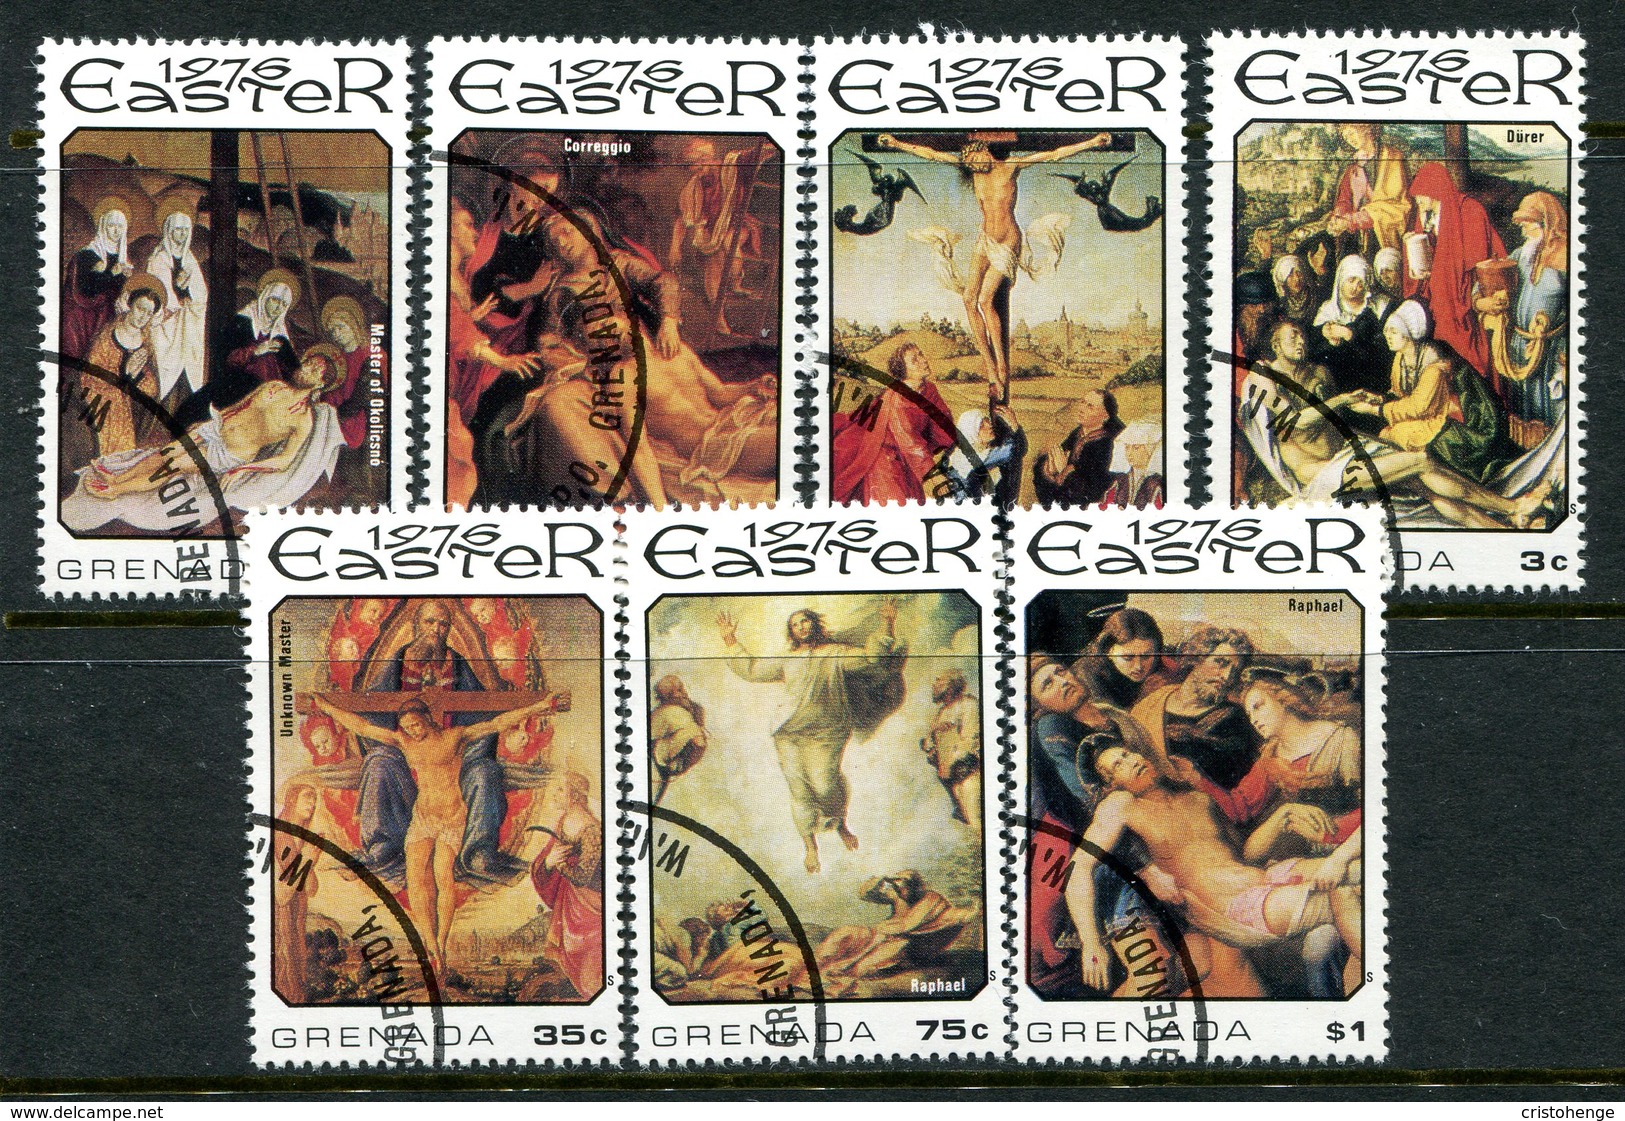 Grenada 1976 Easter Set Used (SG 777-783) - Grenada (1974-...)